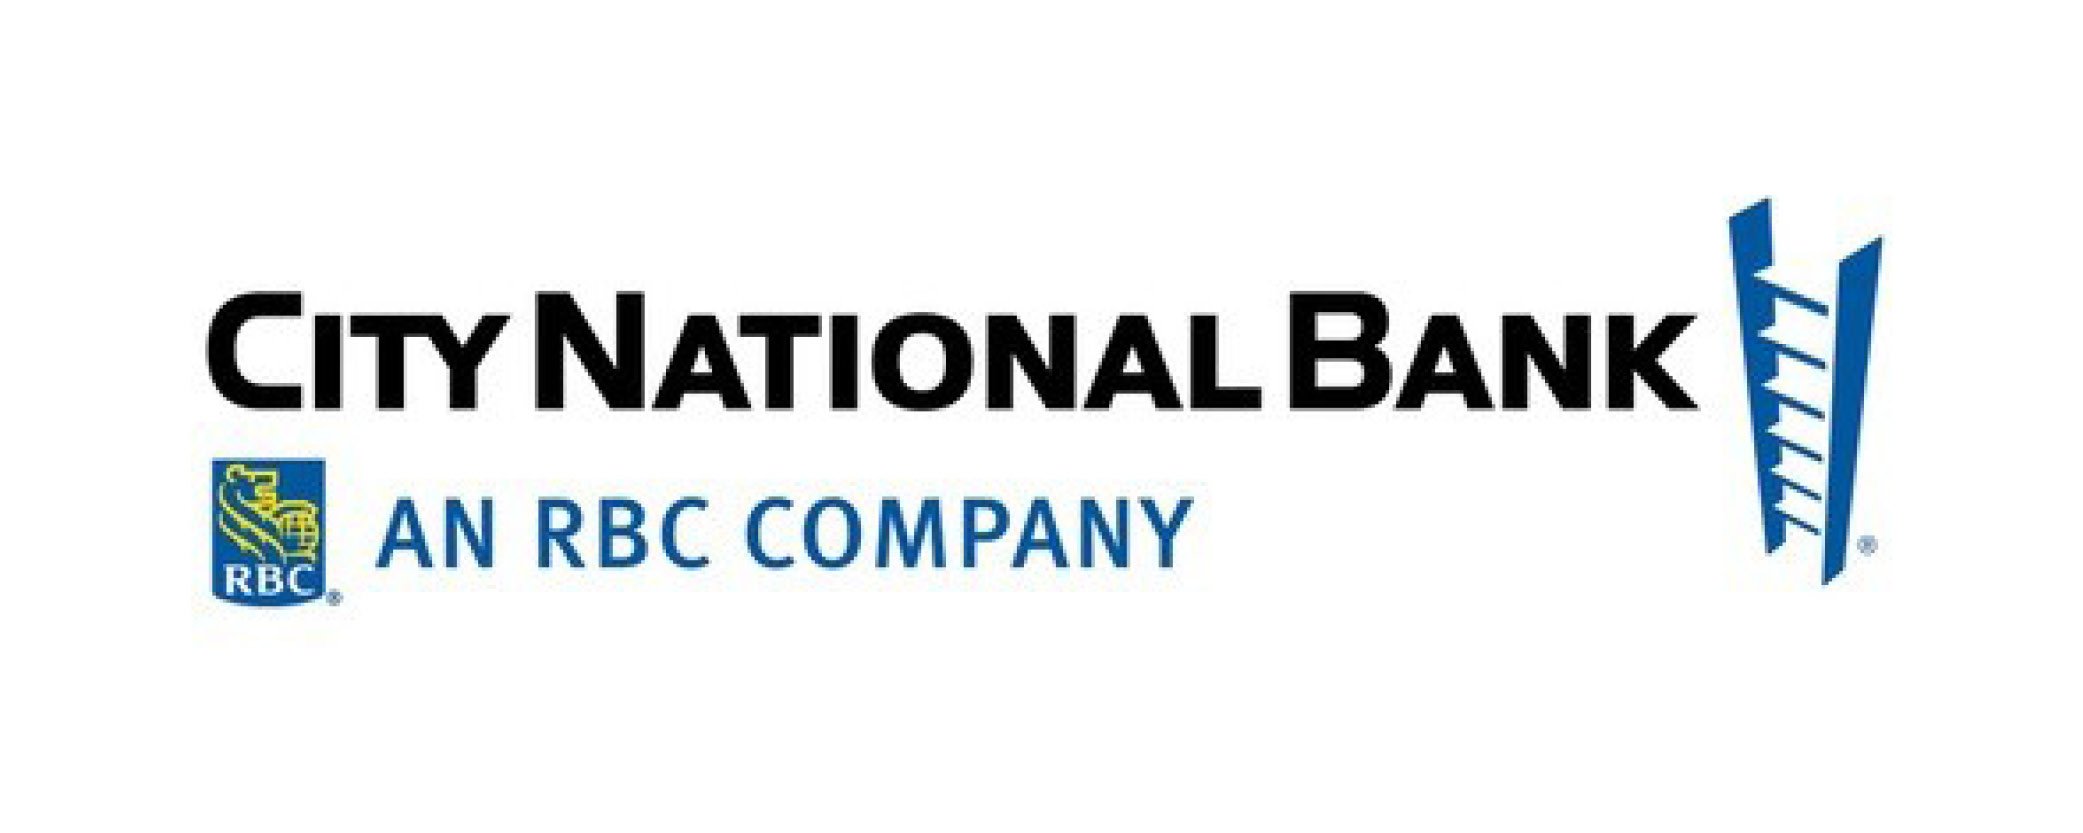 City National Bank.jpg